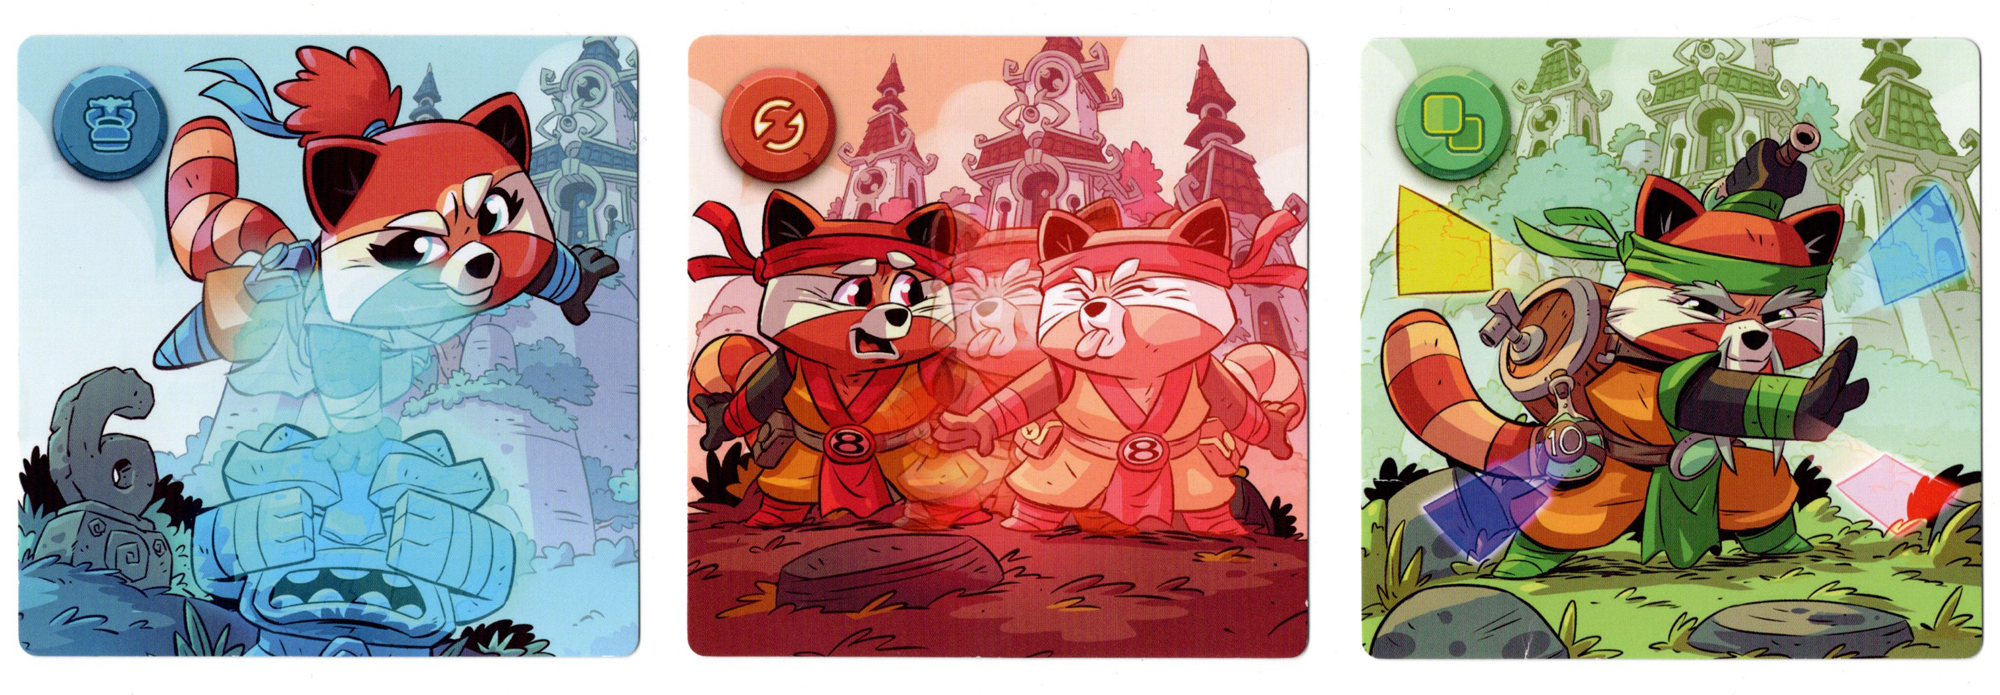 Red-Panda-Cards2